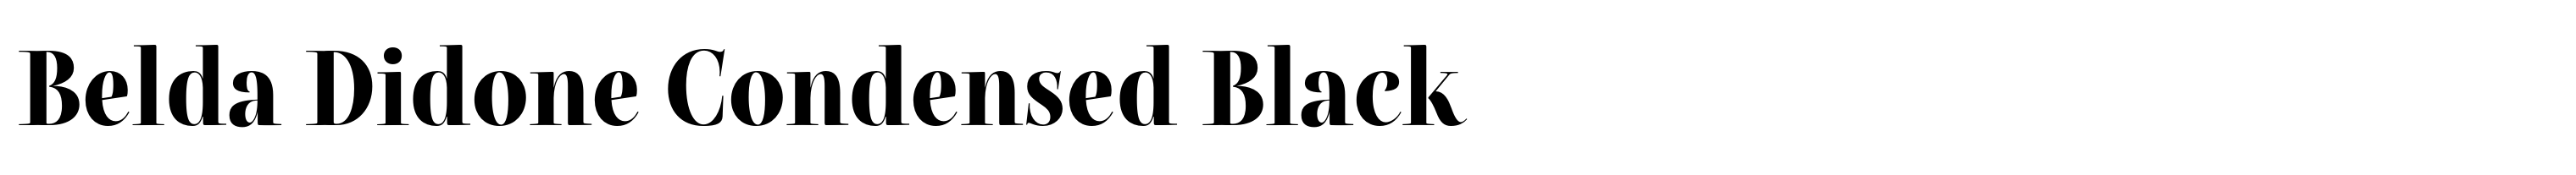 Belda Didone Condensed Black